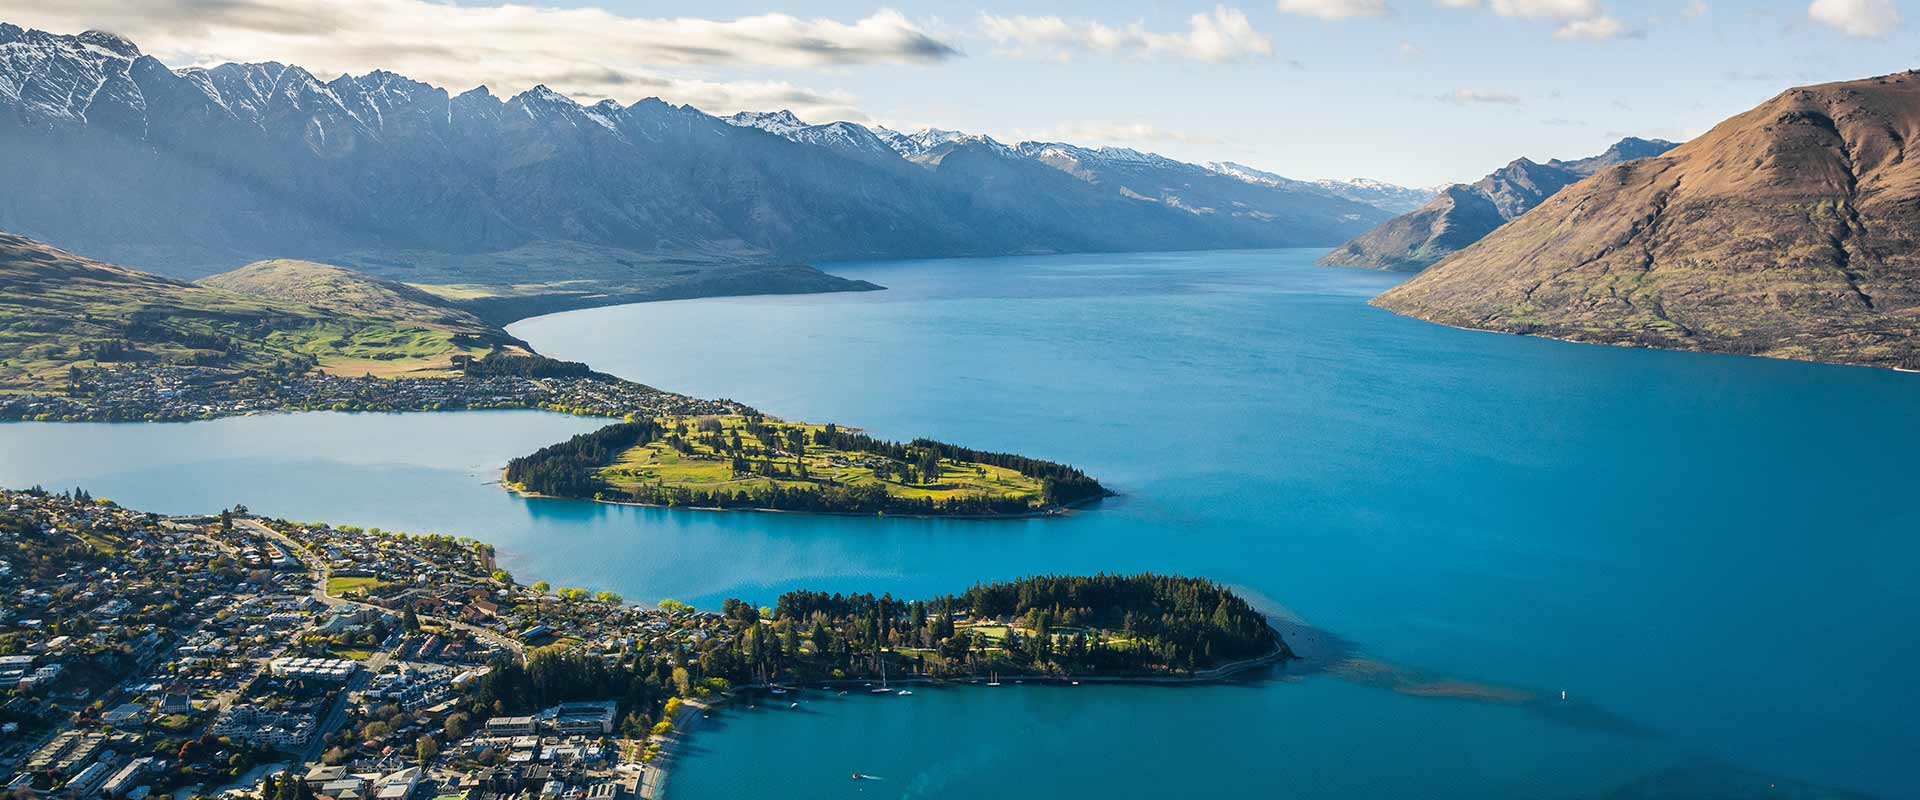 View across the lake surrounding Queenstown, New Zealand